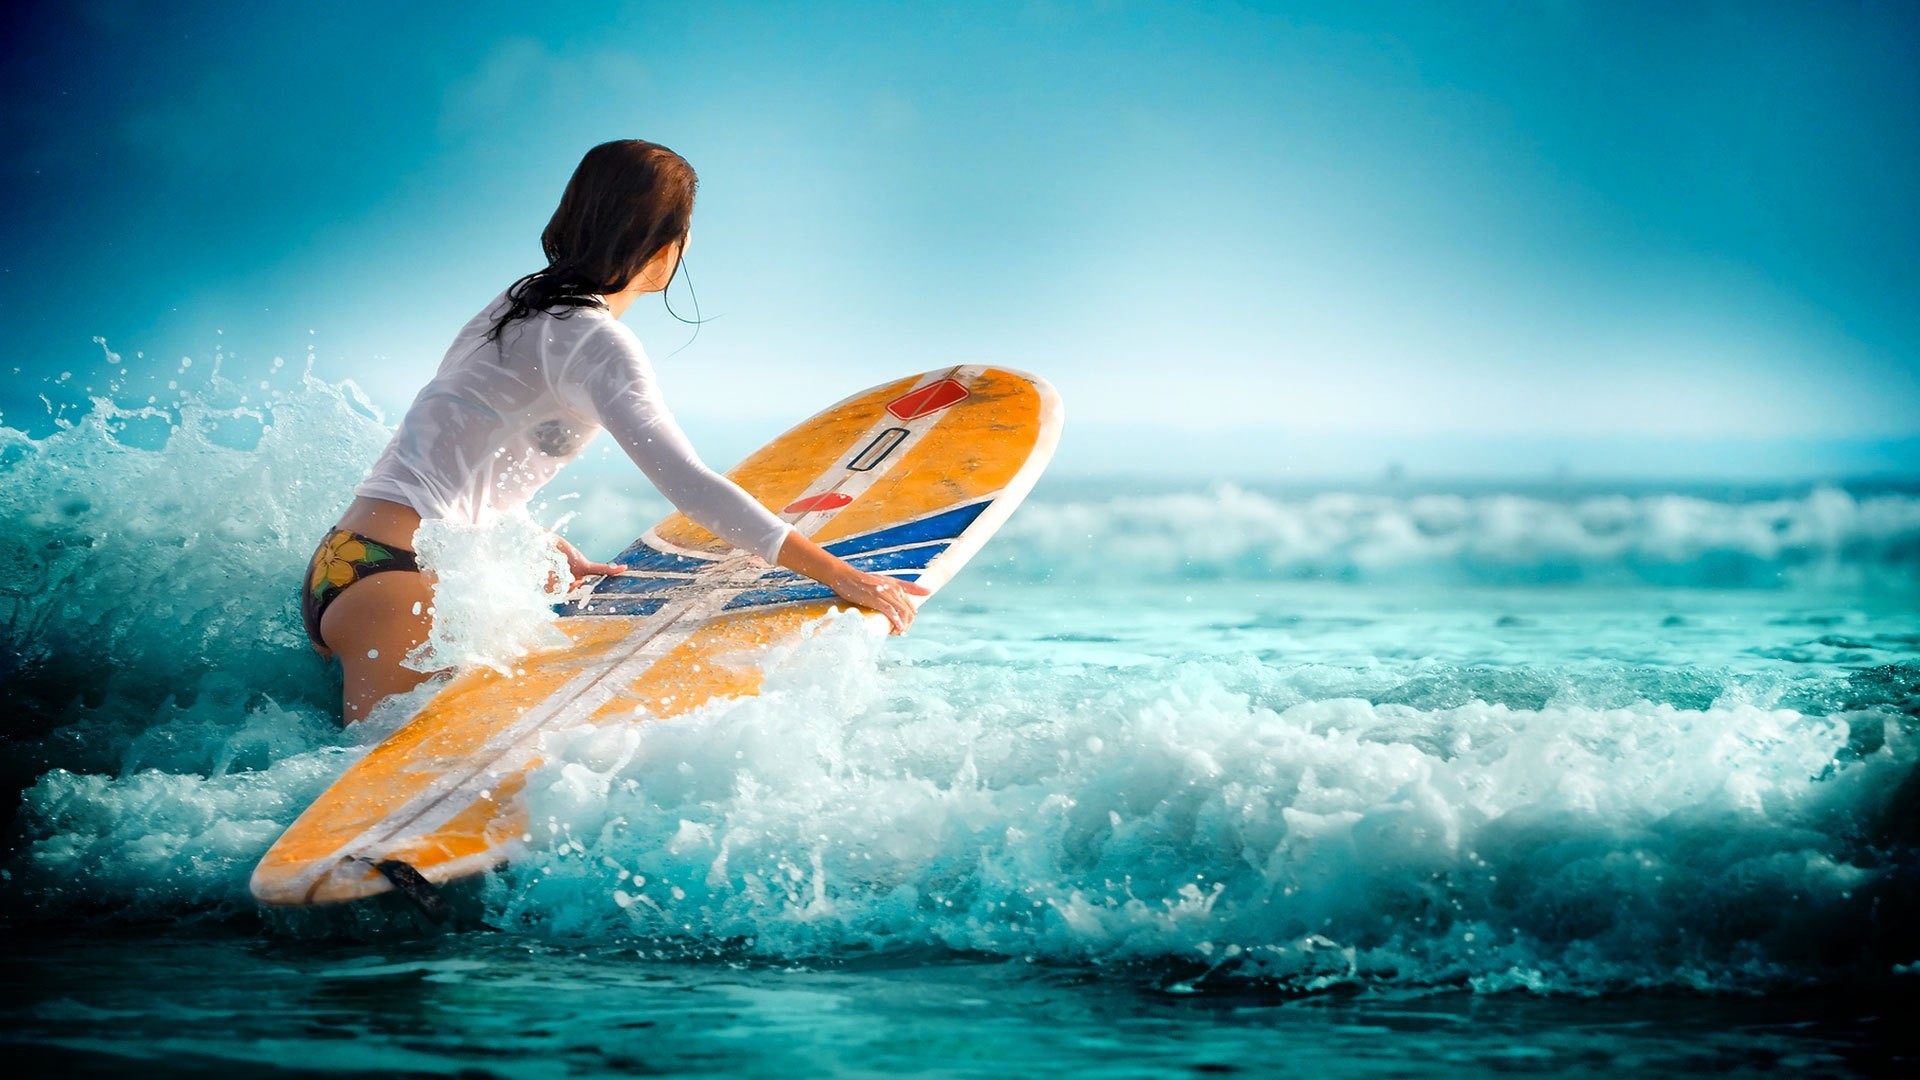 Surfing – Wallpaper, High Definition, High Quality, Widescreen